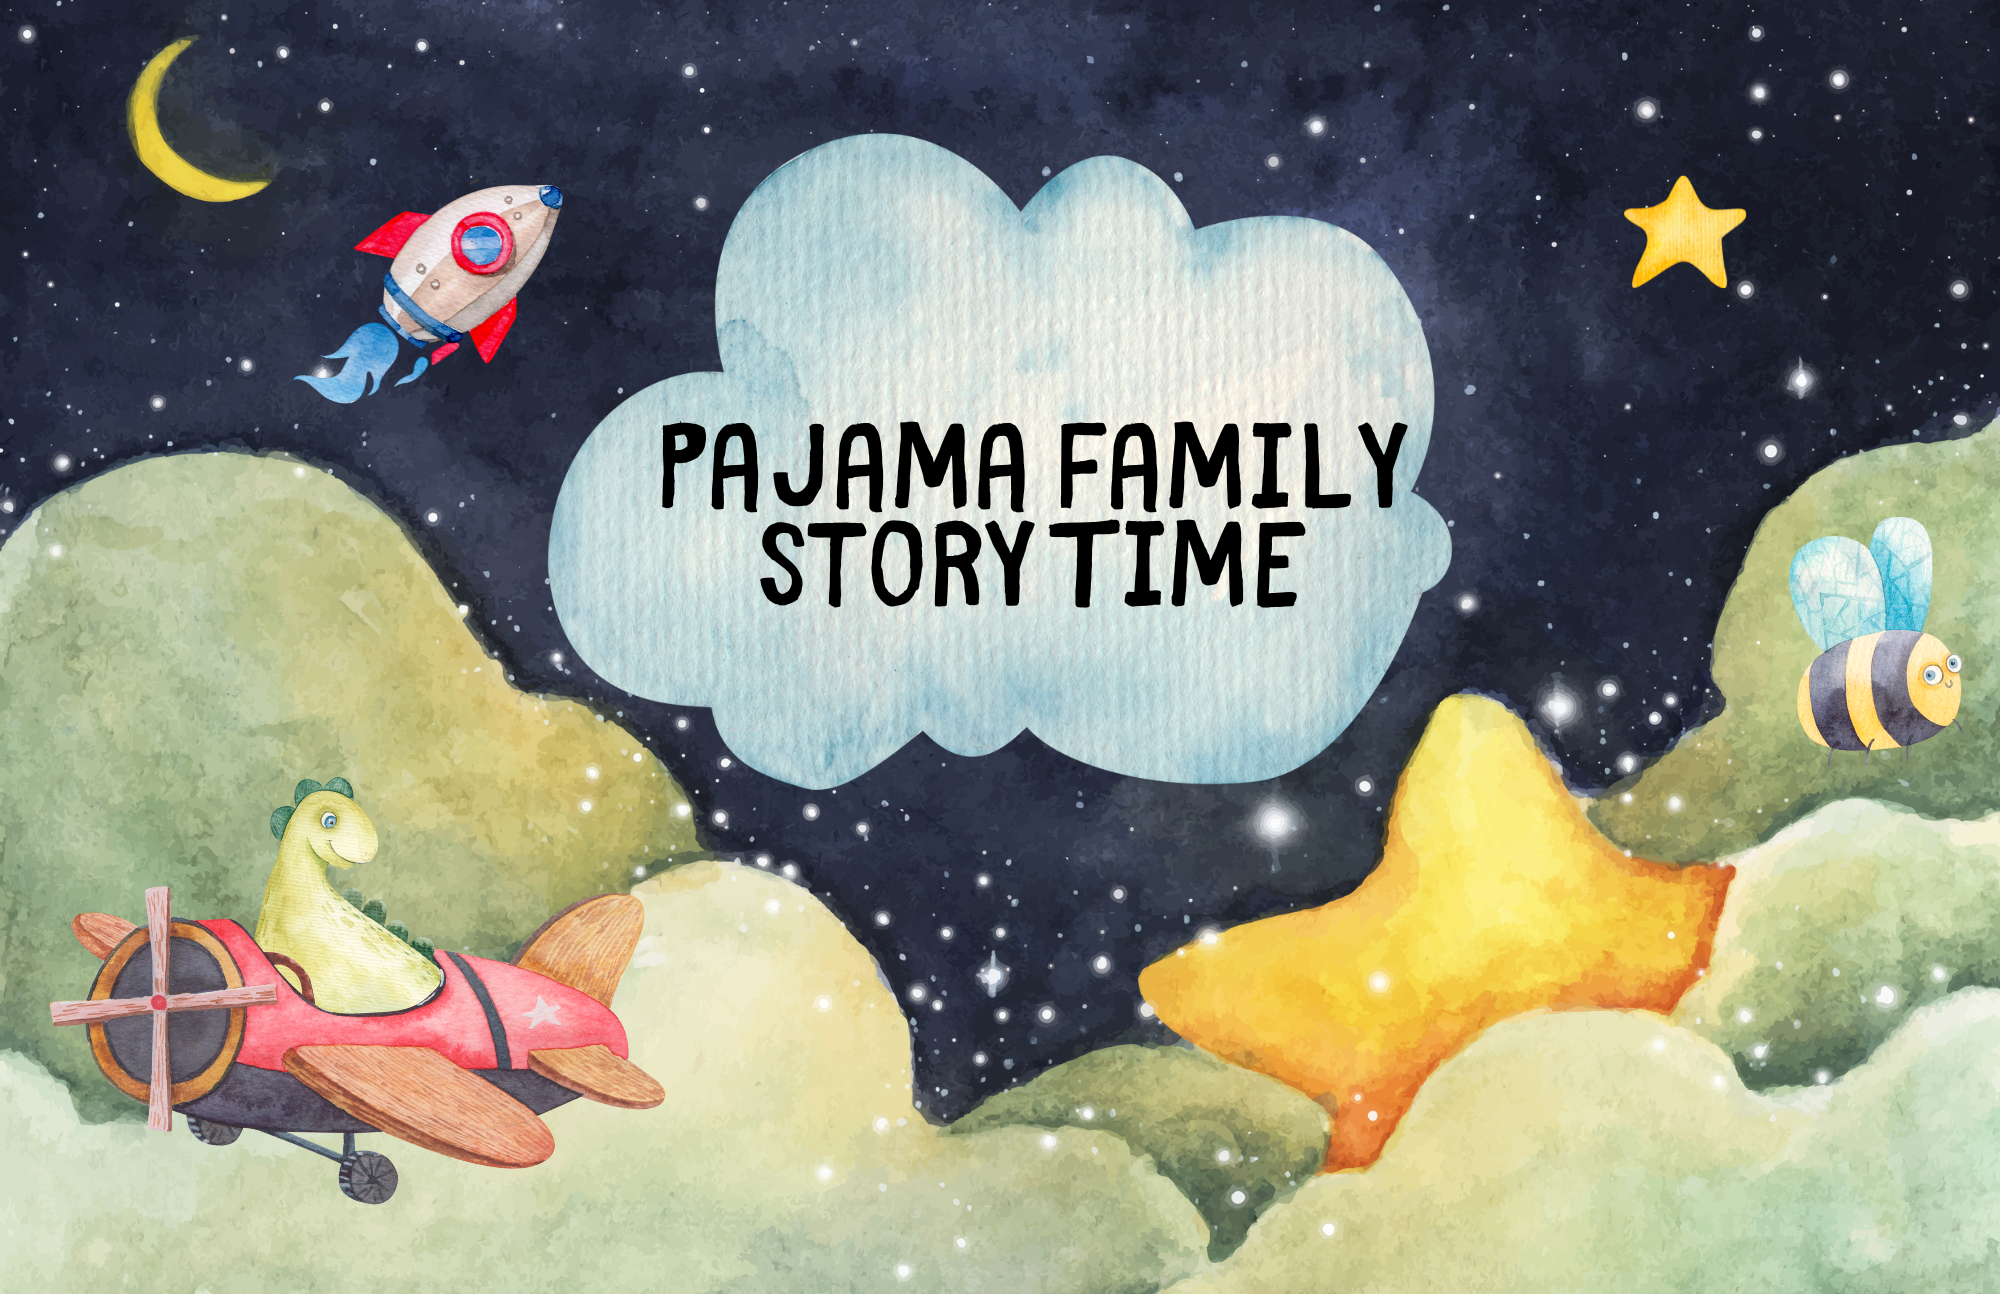 Pajama Story Time among the clouds